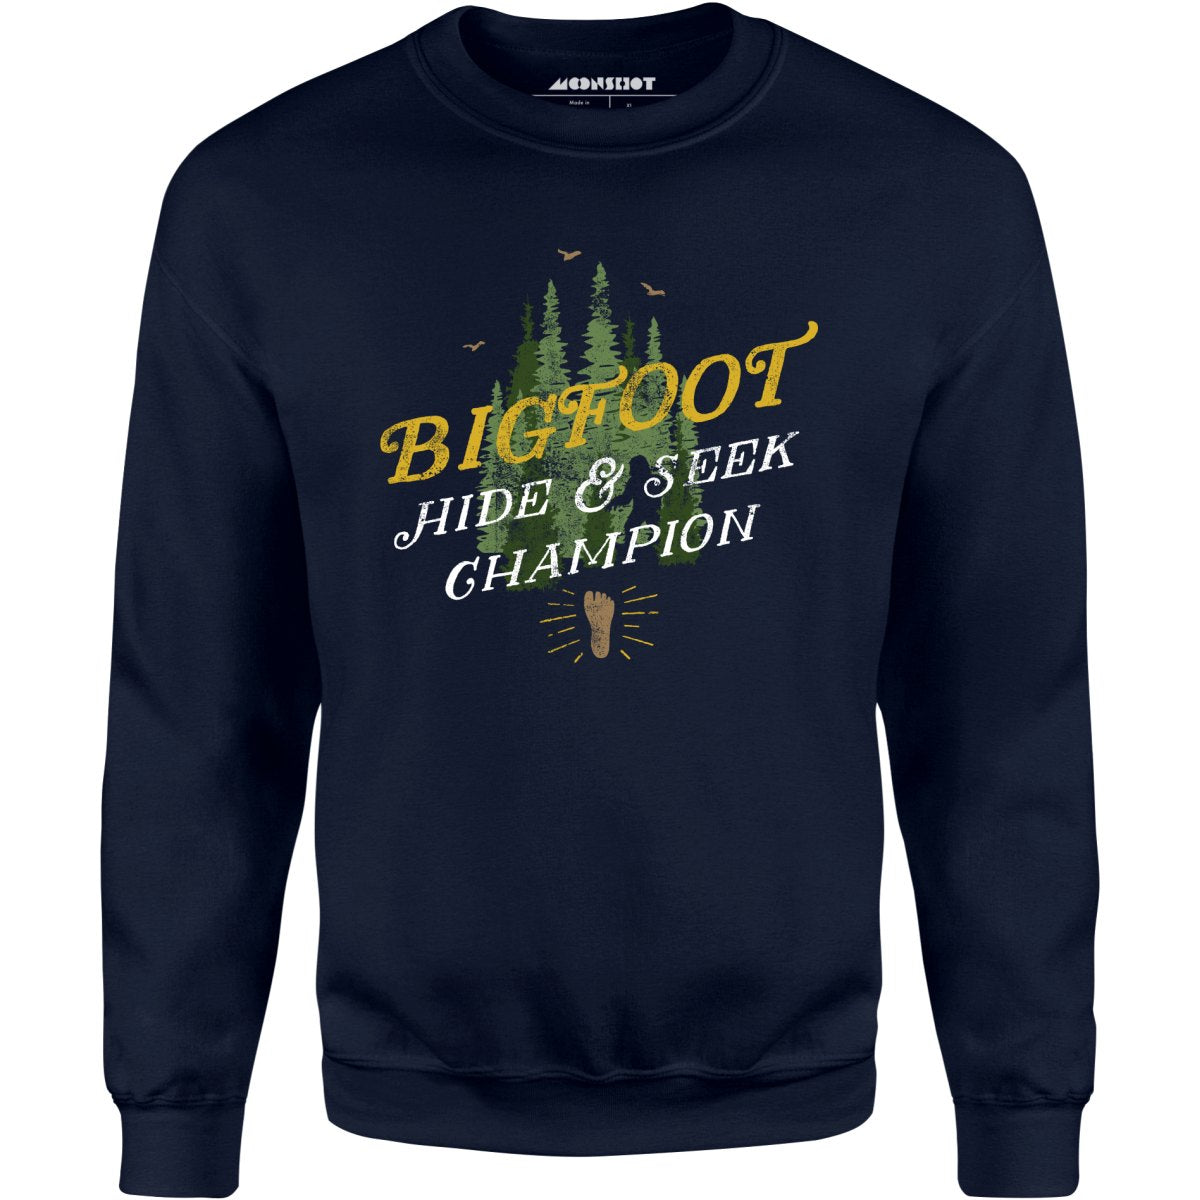 Bigfoot Hide & Seek Champion - Unisex Sweatshirt